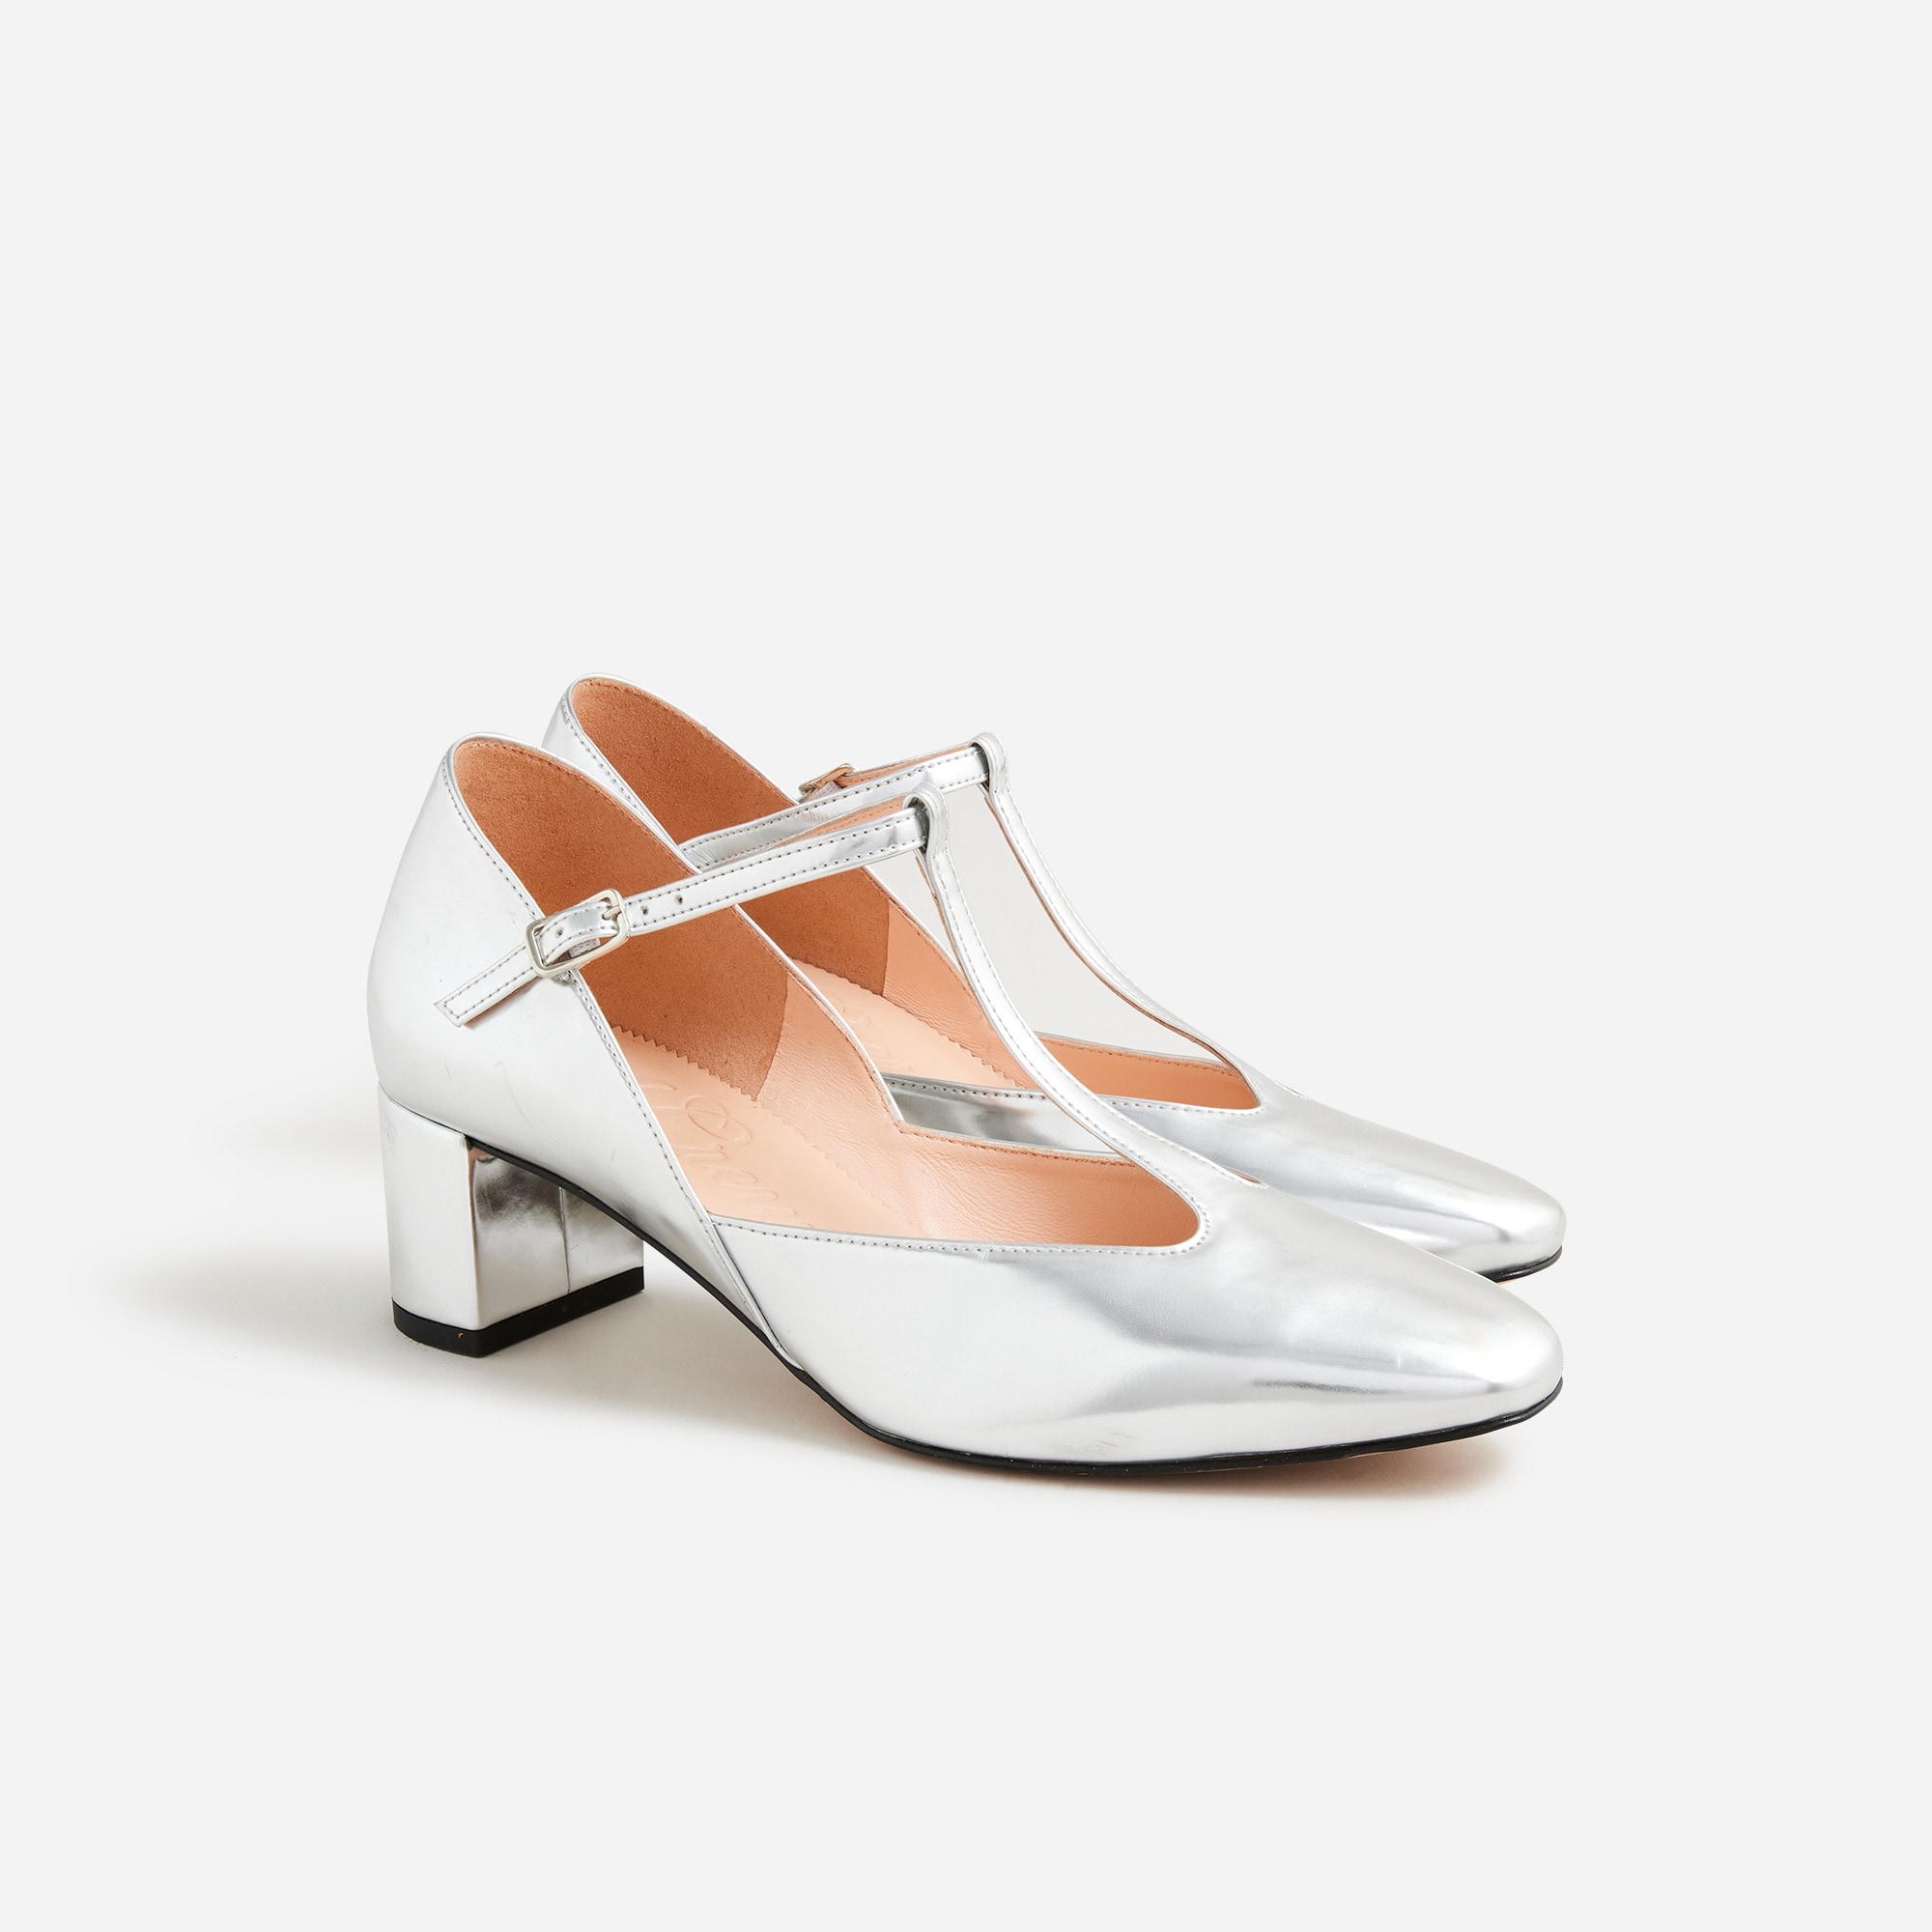 womens Millie T-strap heels in metallic leather